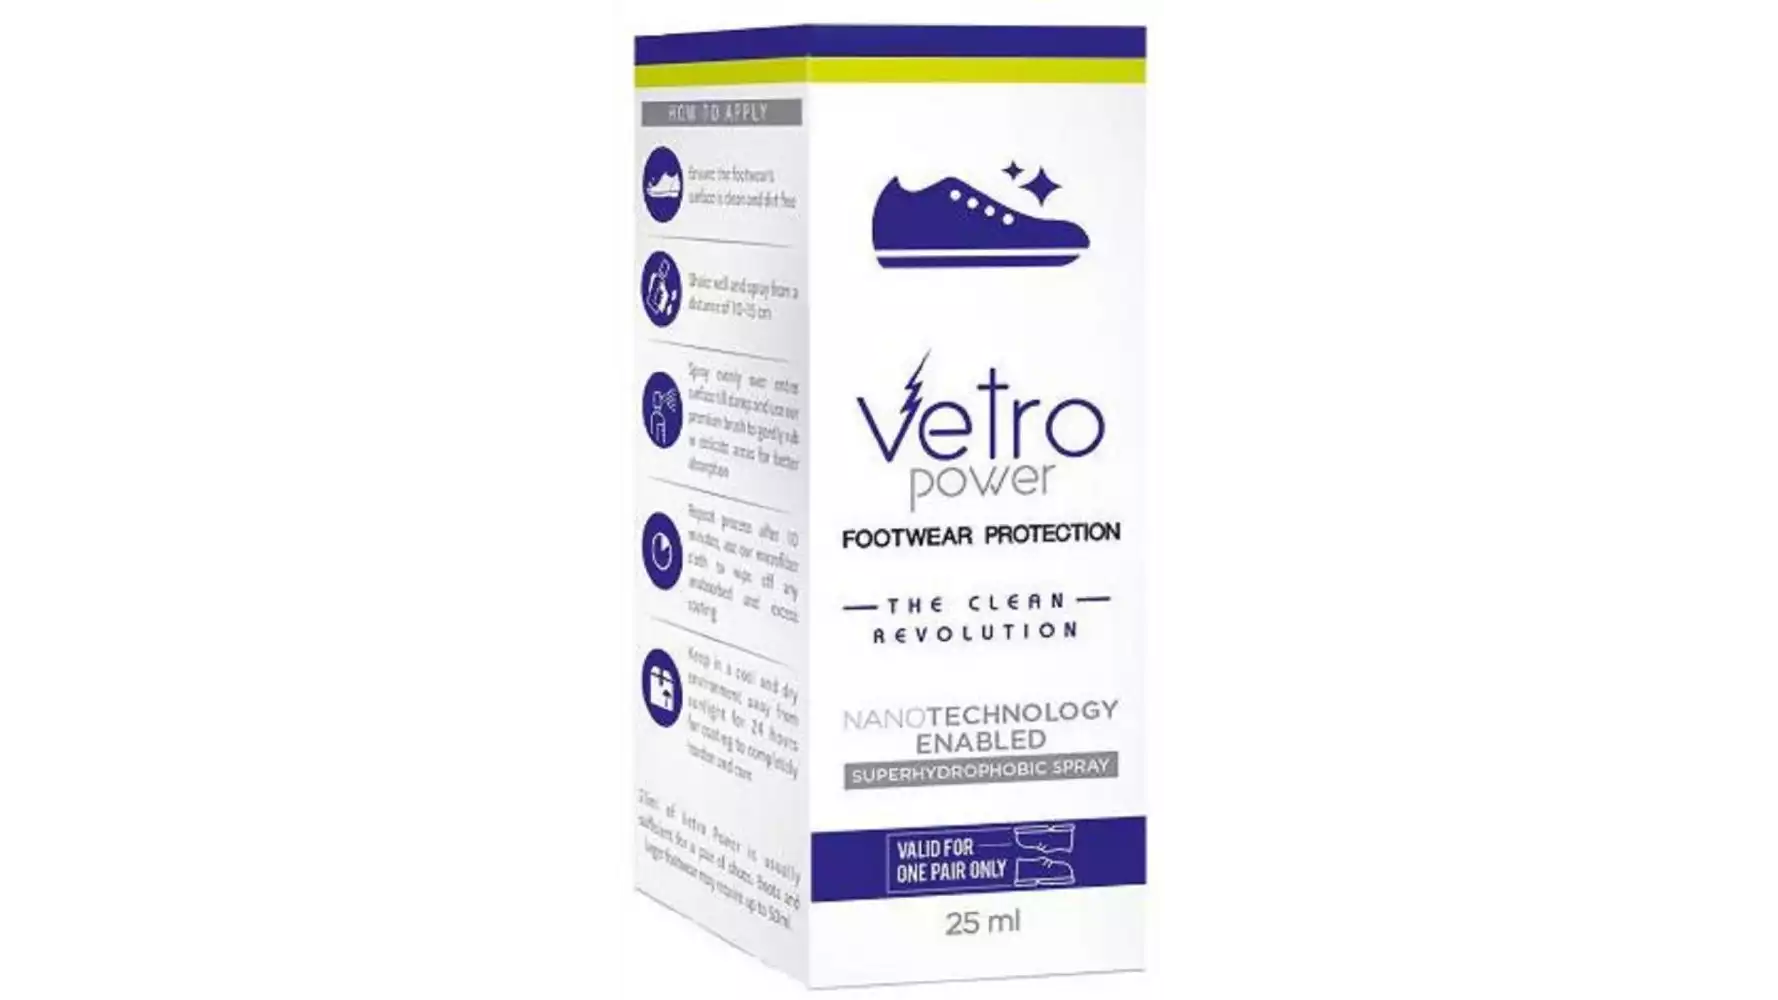 Vetro Power Footwear Protection (25ml)